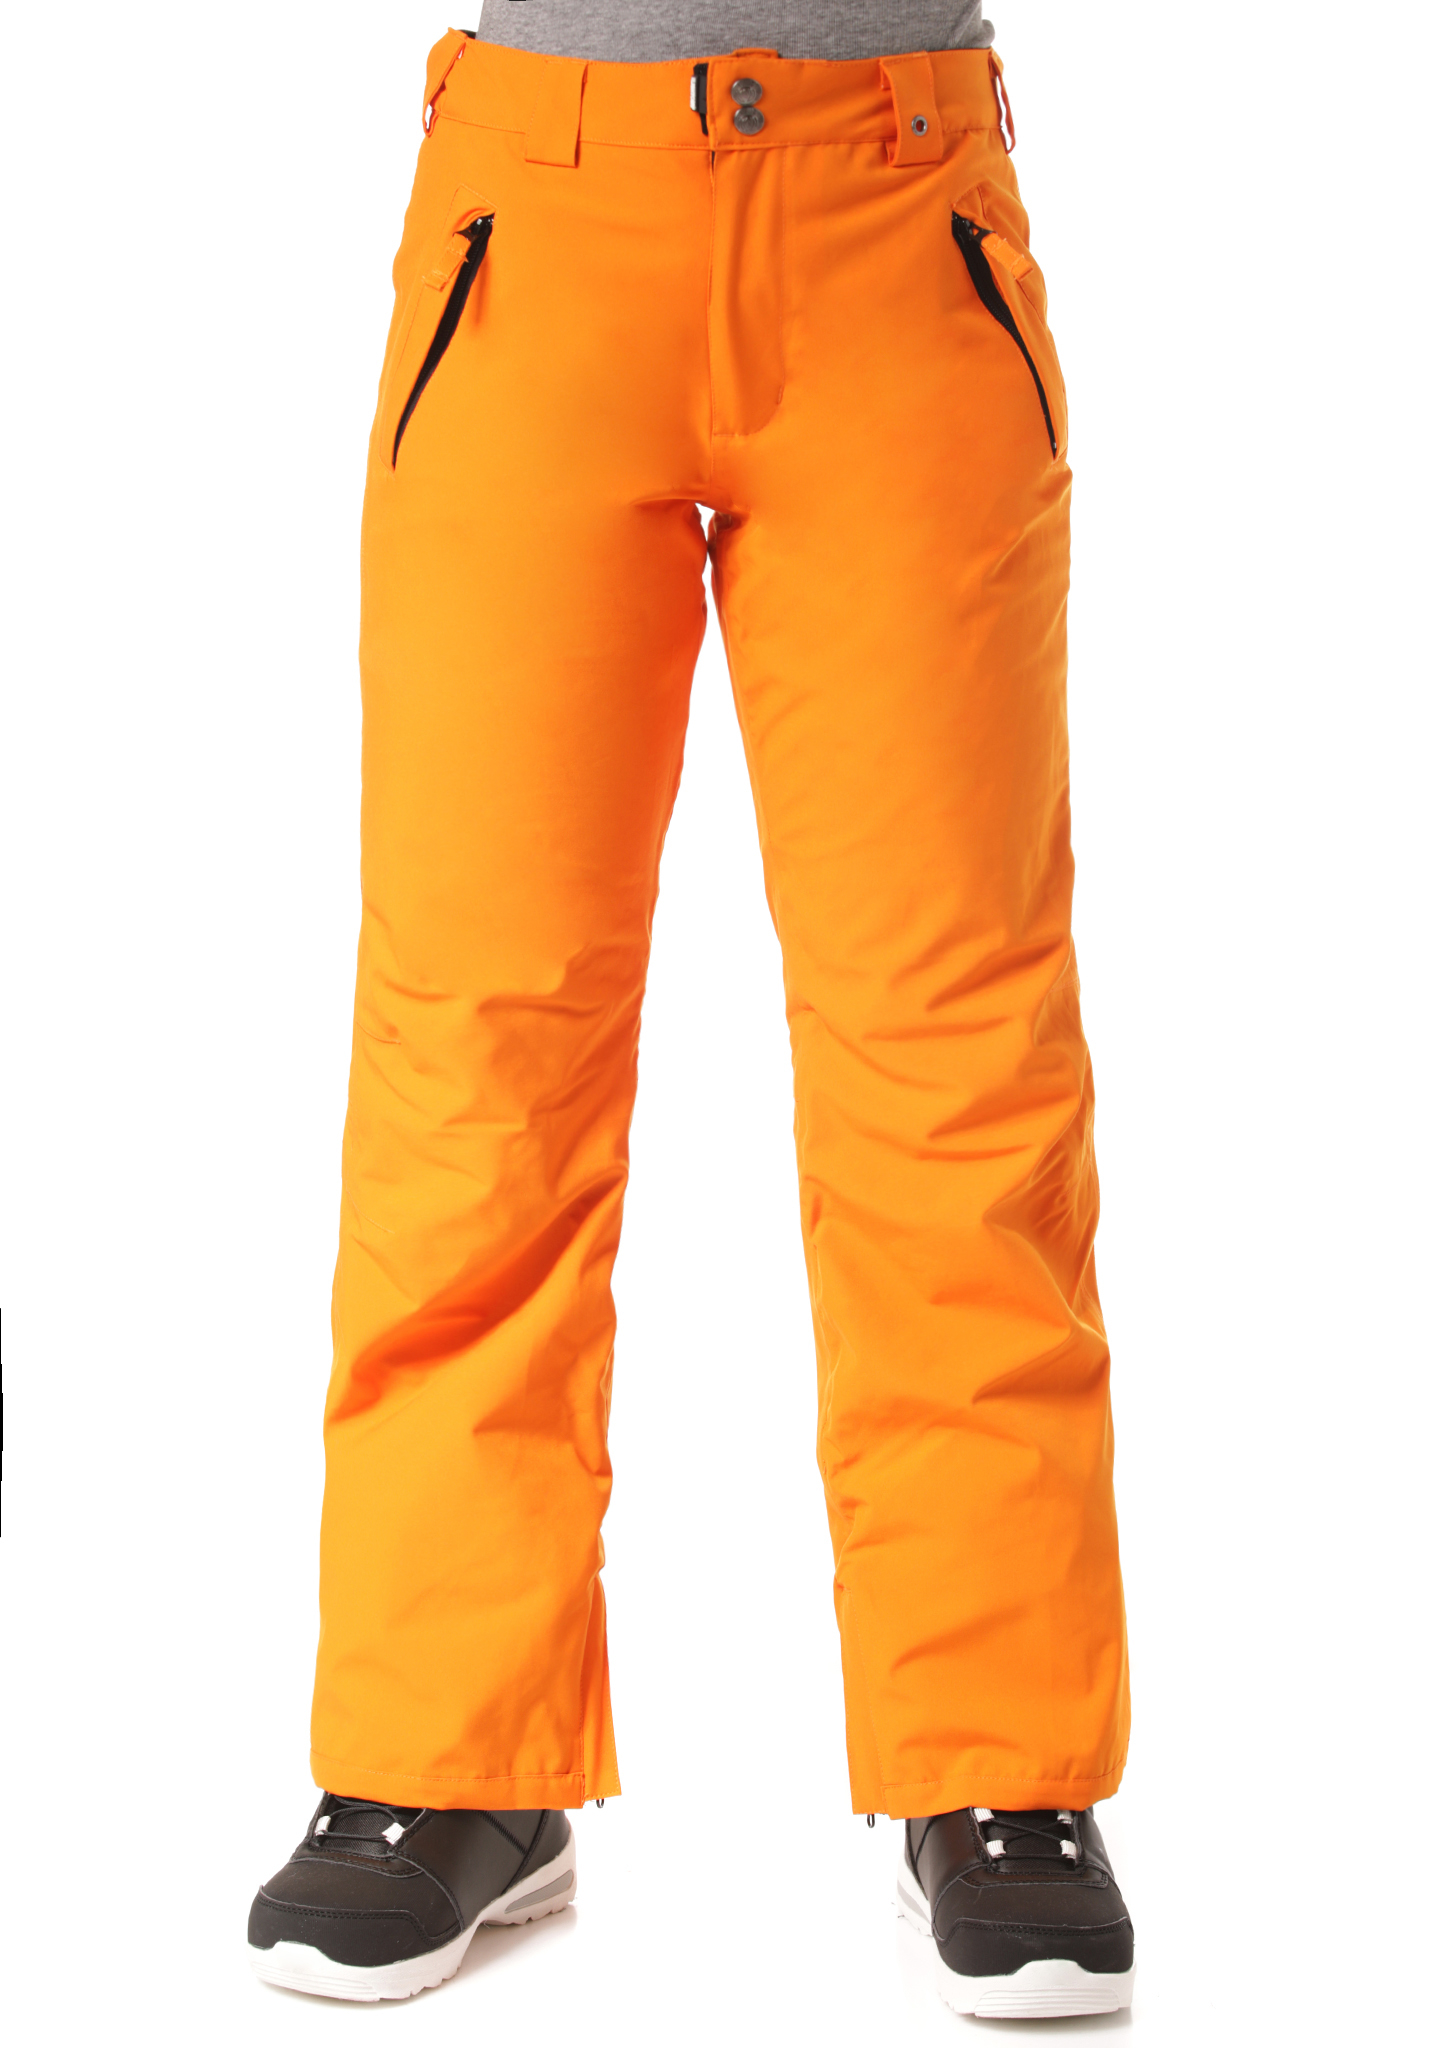 LIGHT Yoko Snowboardhosen russet orange L